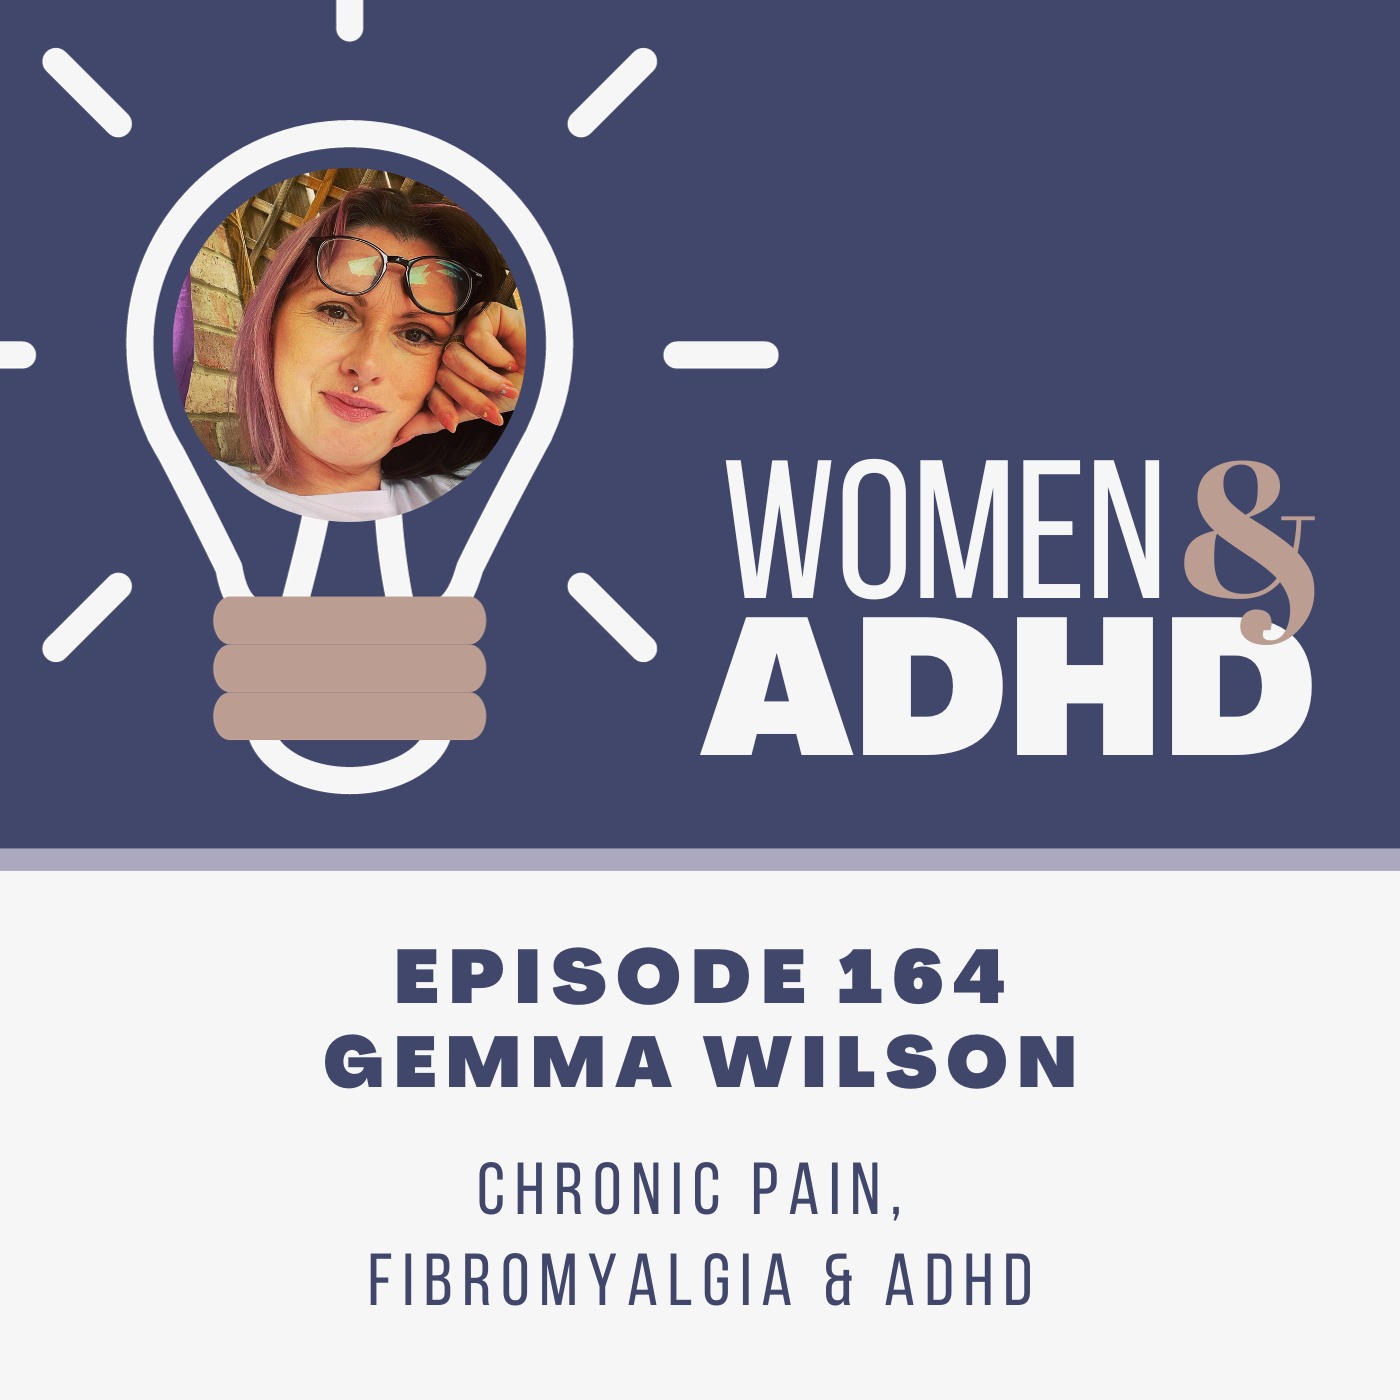 Gemma Wilson: Chronic pain, fibromyalgia & ADHD